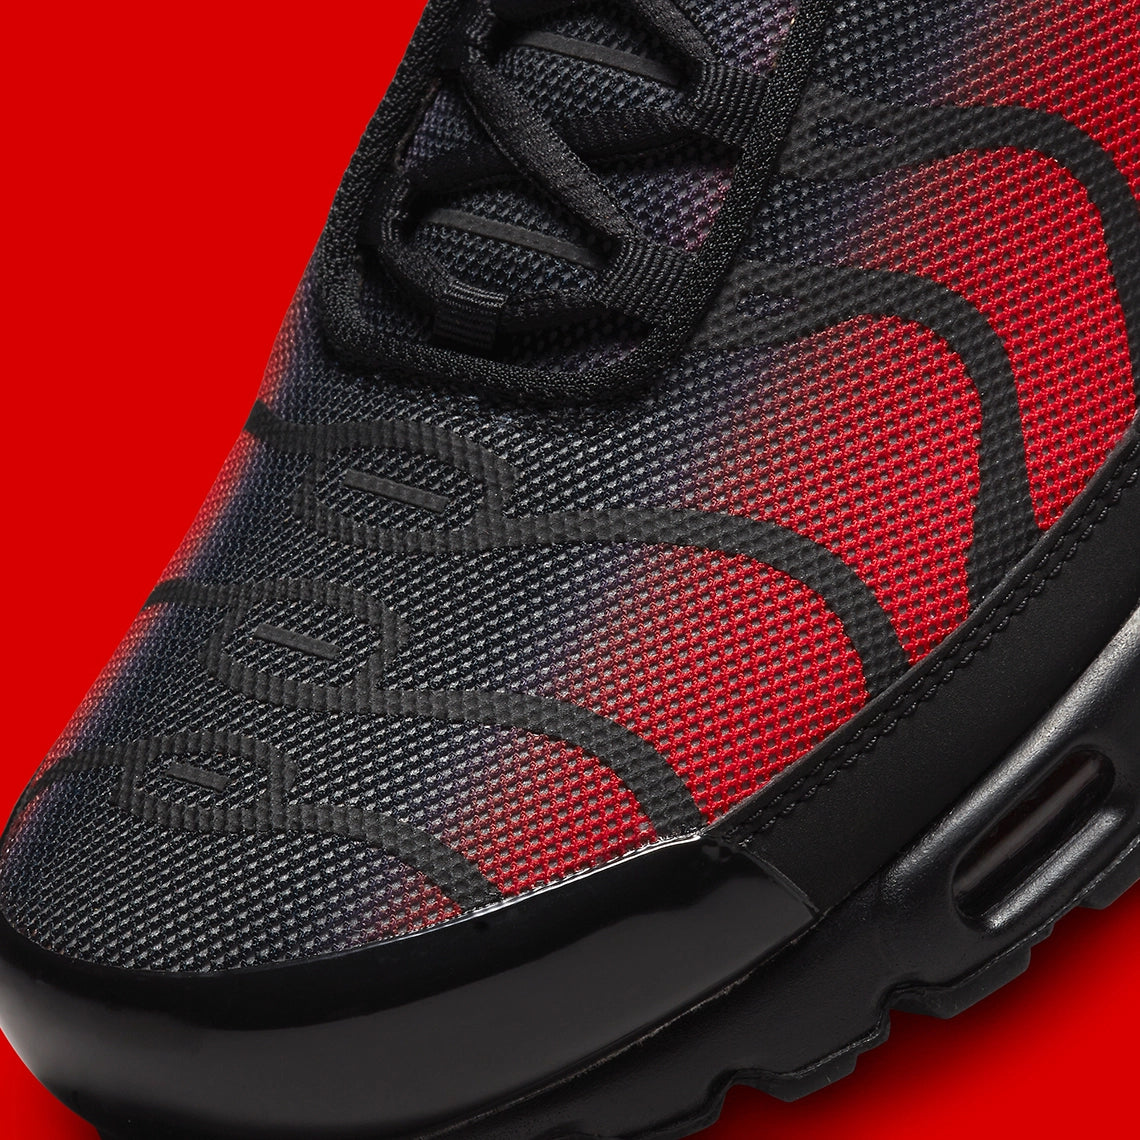 Nike Air Max Plus Bred Reflective